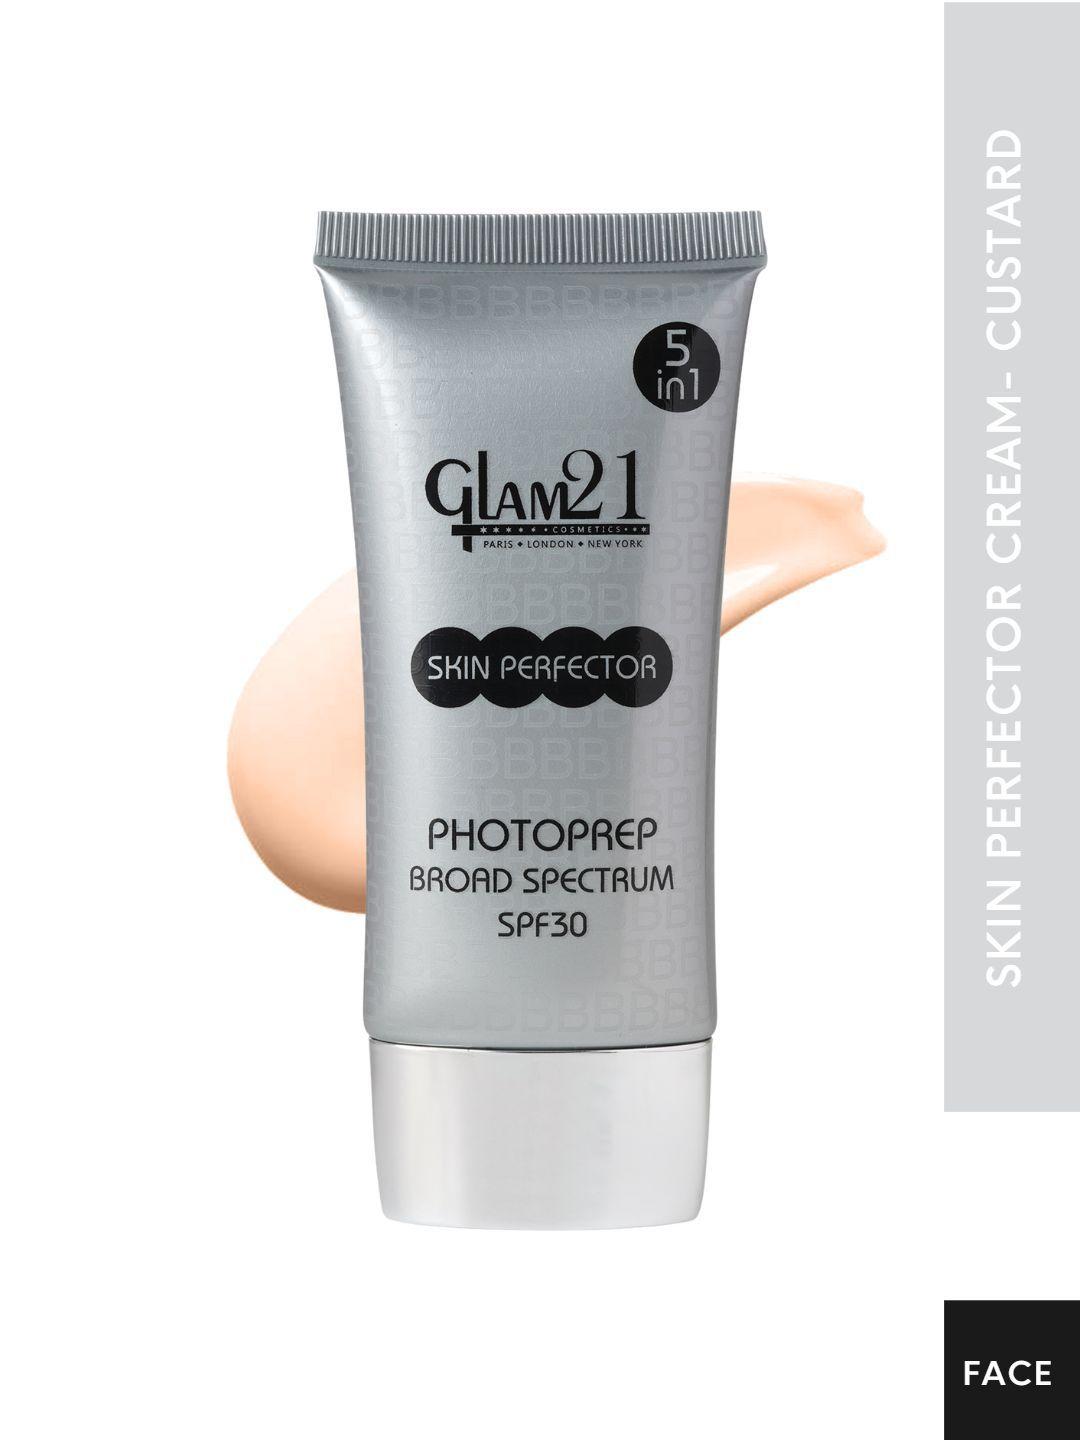 glam21 skin perfector photoprep broad spectrum spf30 primer 50g - custard